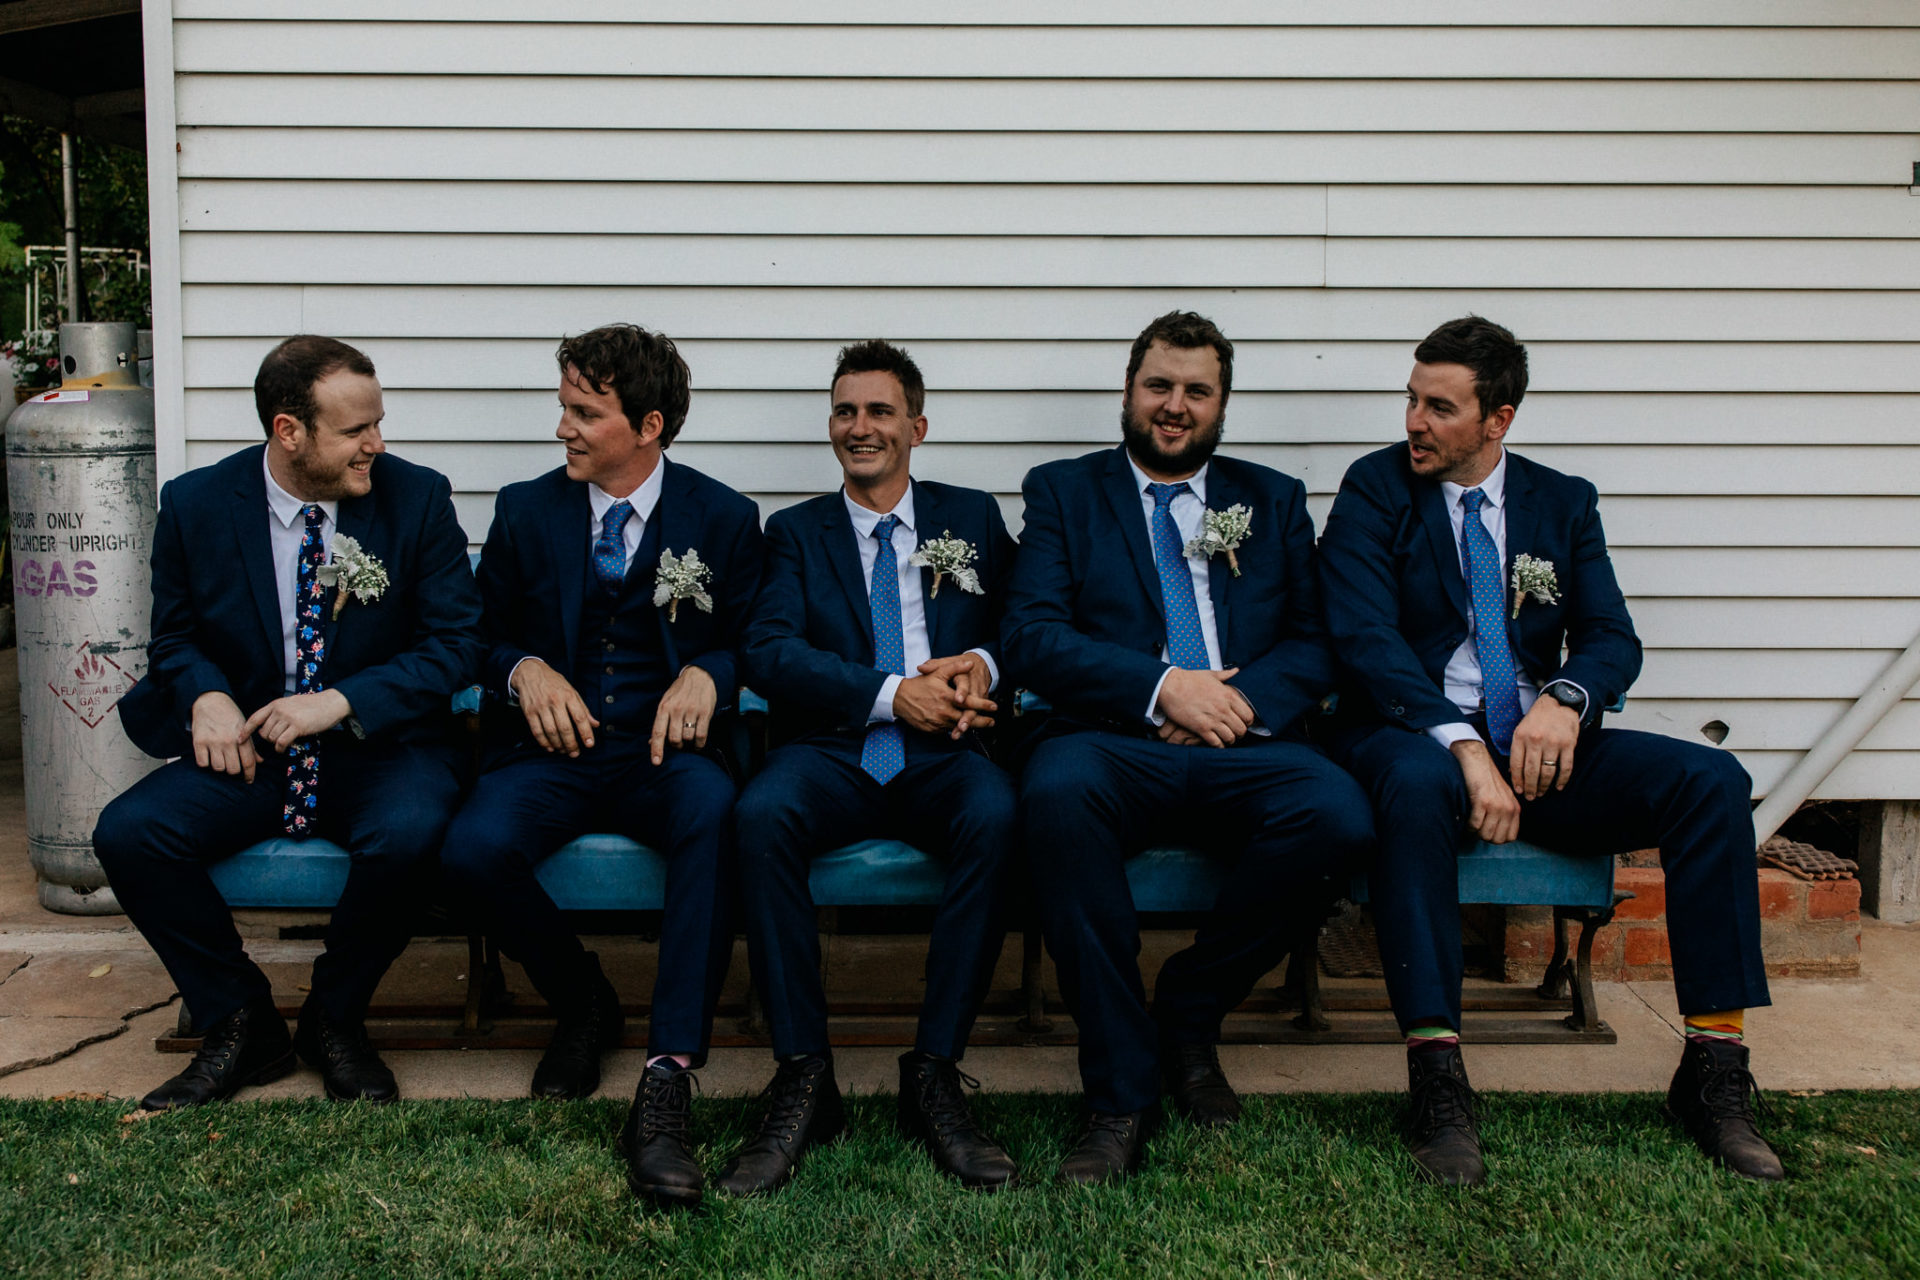 backyard-wedding-australia-melbourne-bridal-party-groomsmen-blue-suits